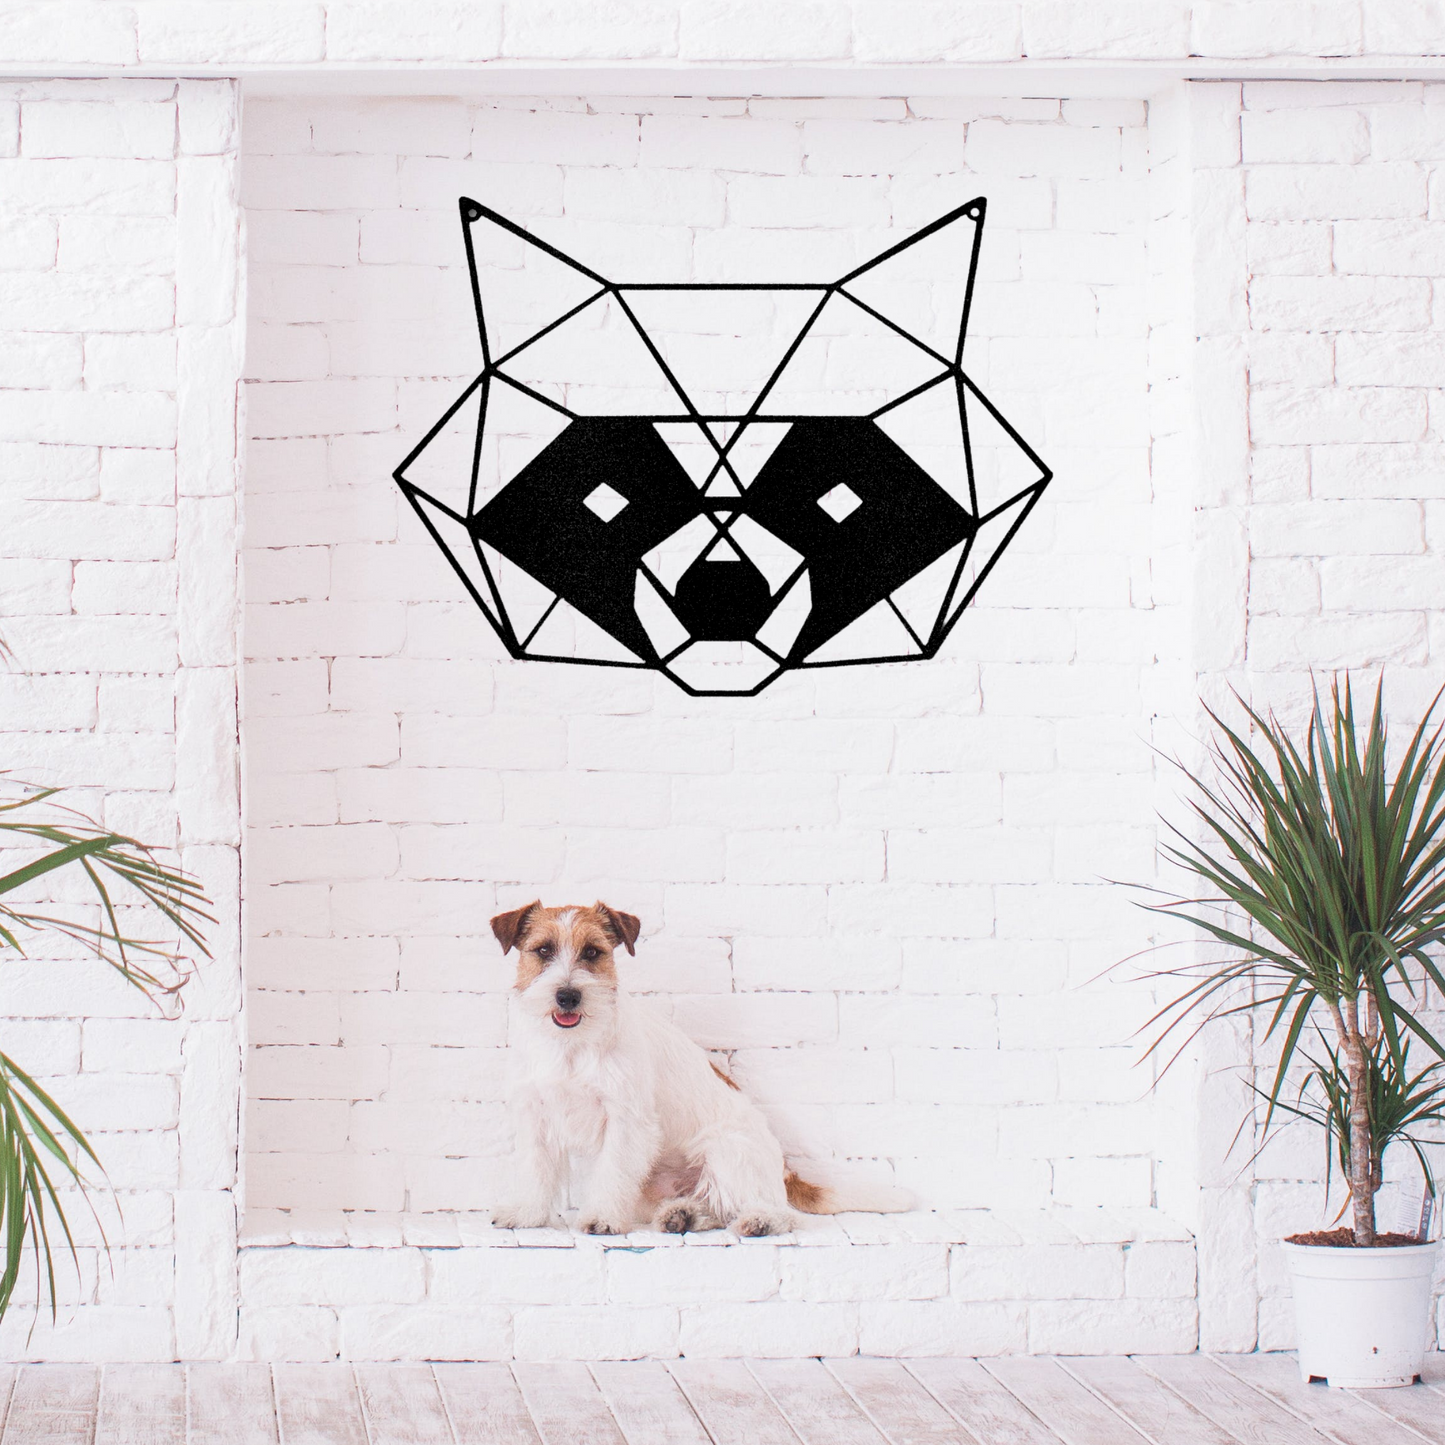 Geometric Raccoon - Steel Sign, Metal Monogram, House Decor, Wall Art, Metal Signs, Metal Decorative Signs, Door Hanger, Monogram Wall Art